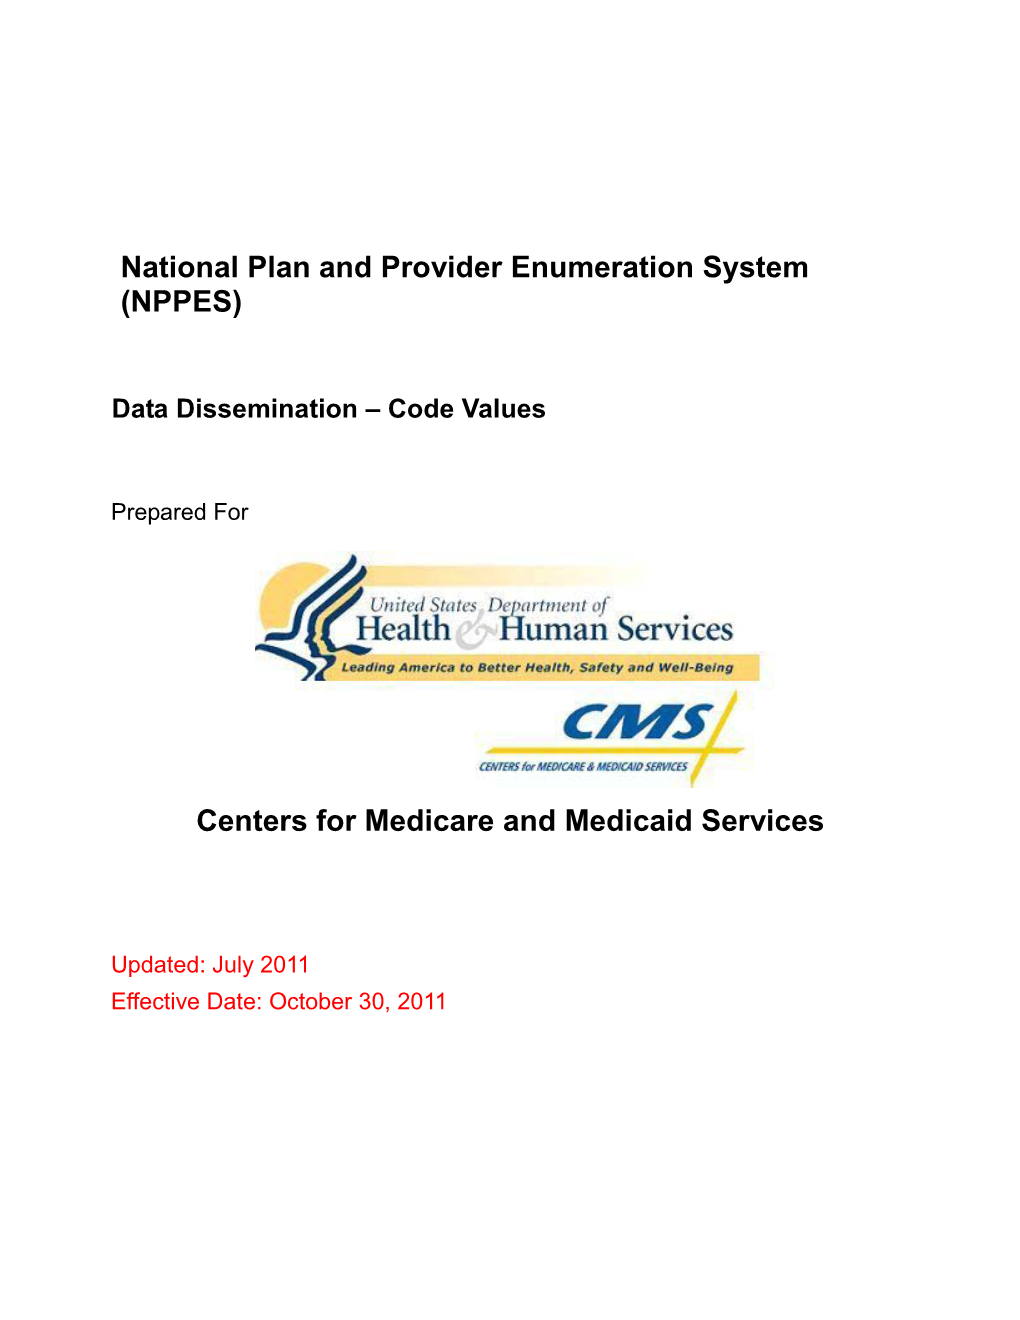 NPPES Data Dissemination - Code Values July 2011 I